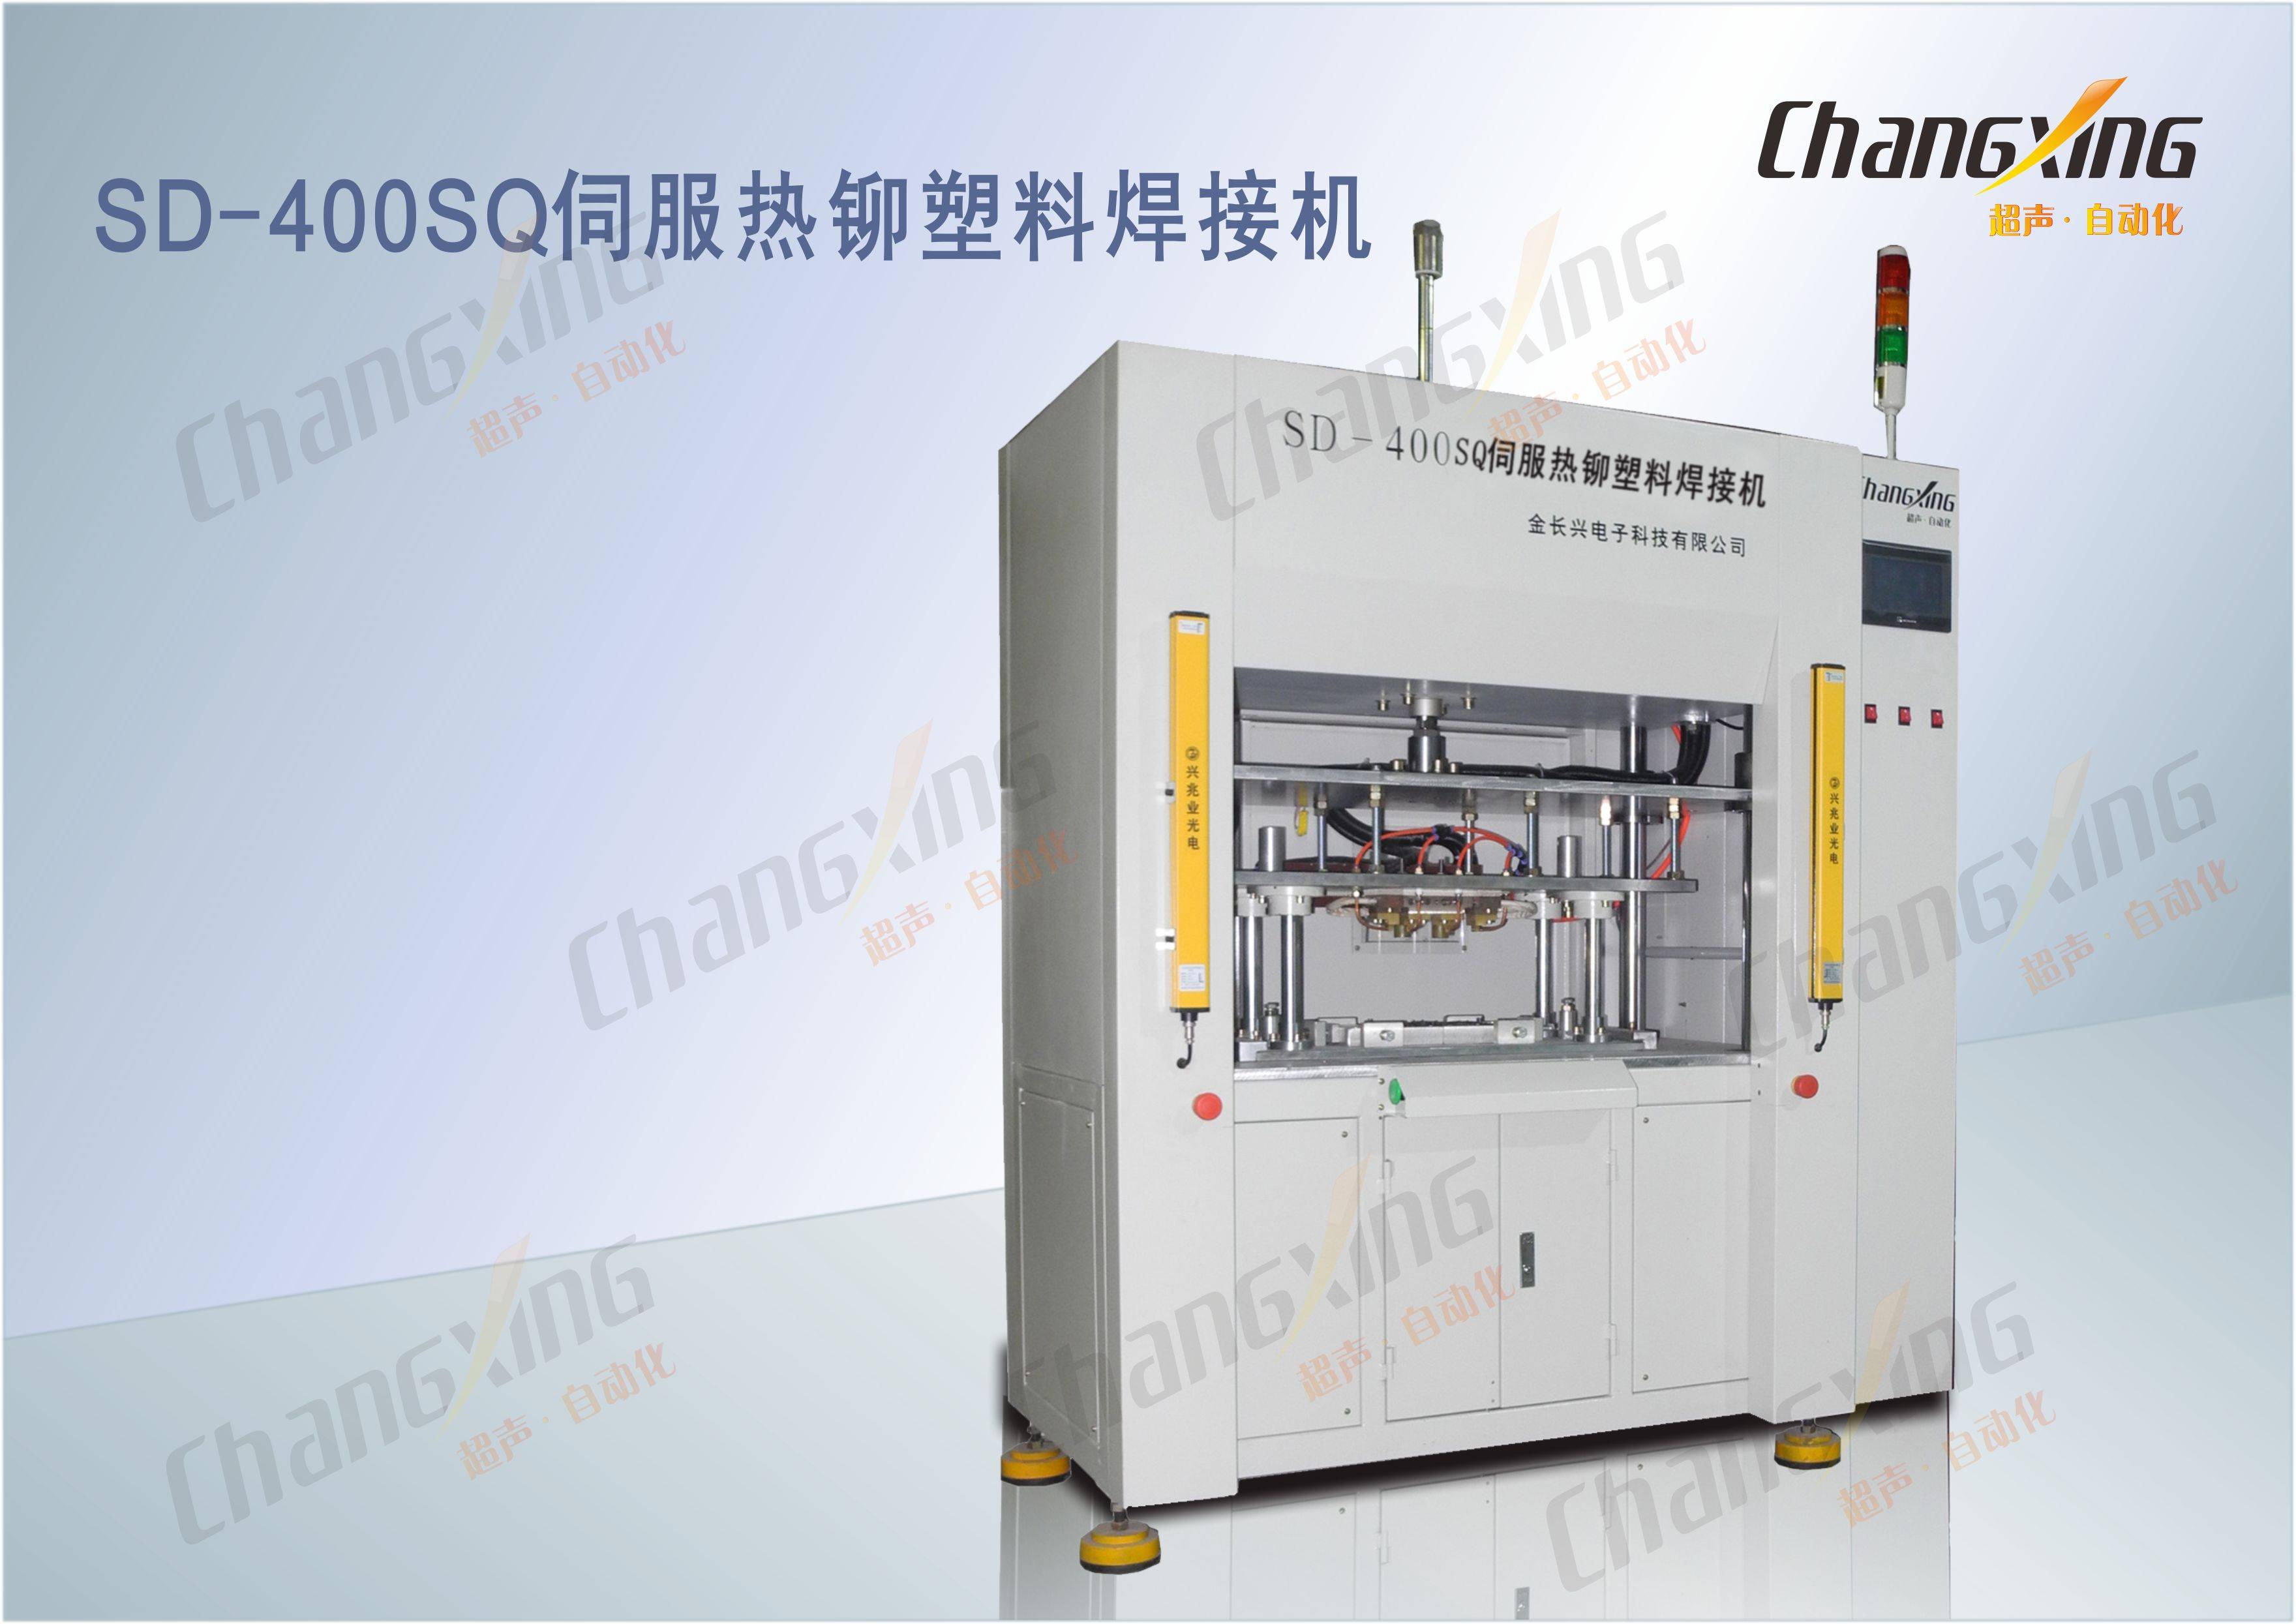 SD-400SQ伺服热铆塑料焊接机(1)